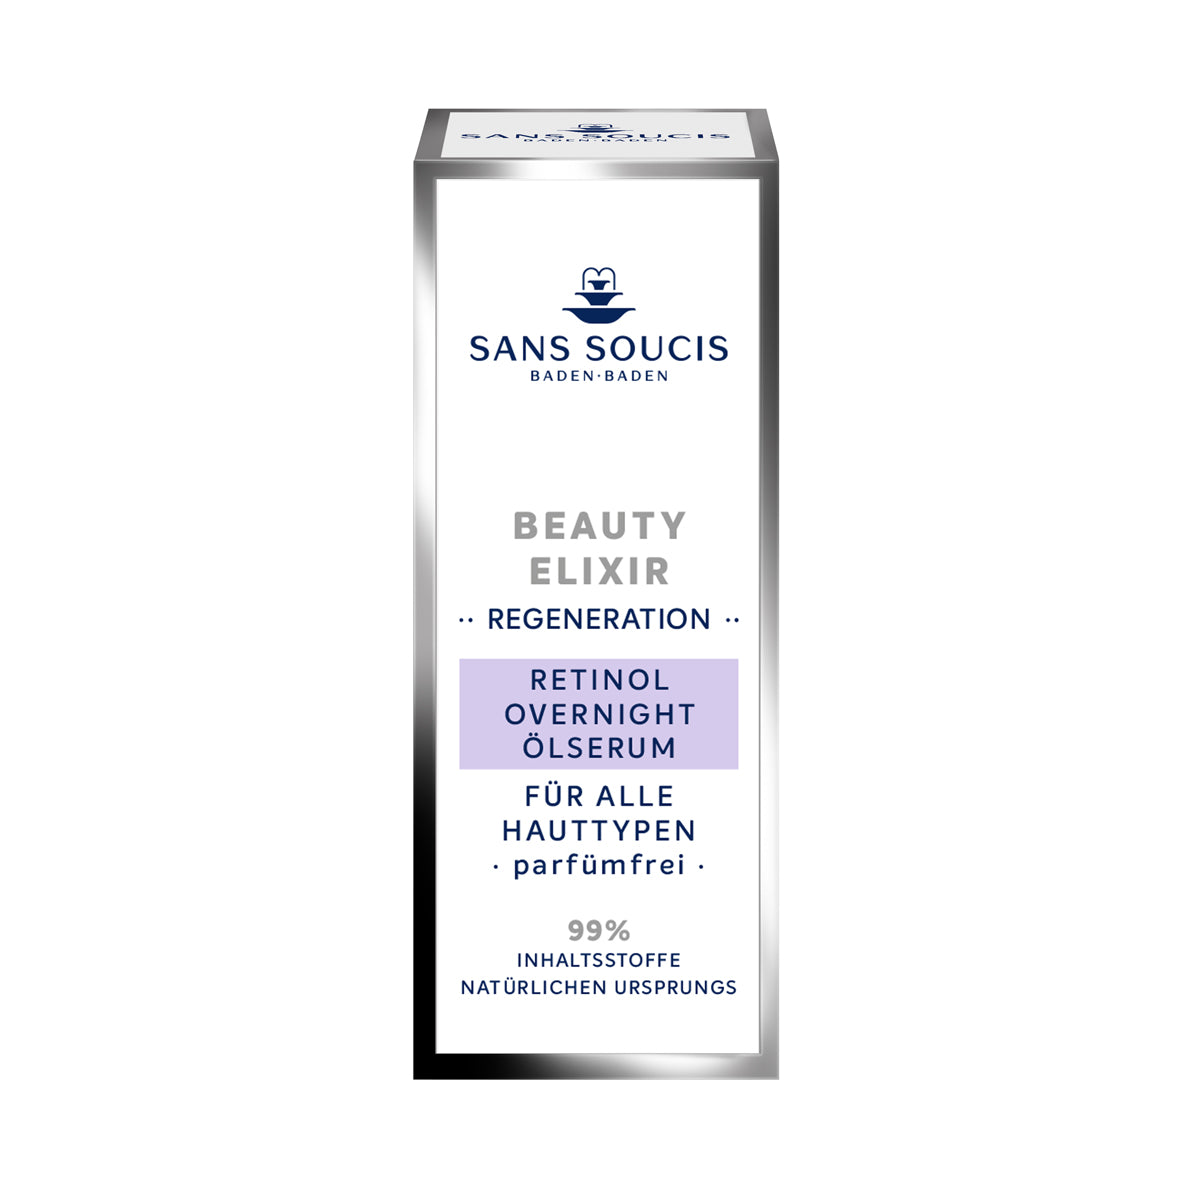 Beauty Elixir Retinol Overnight Ölserum